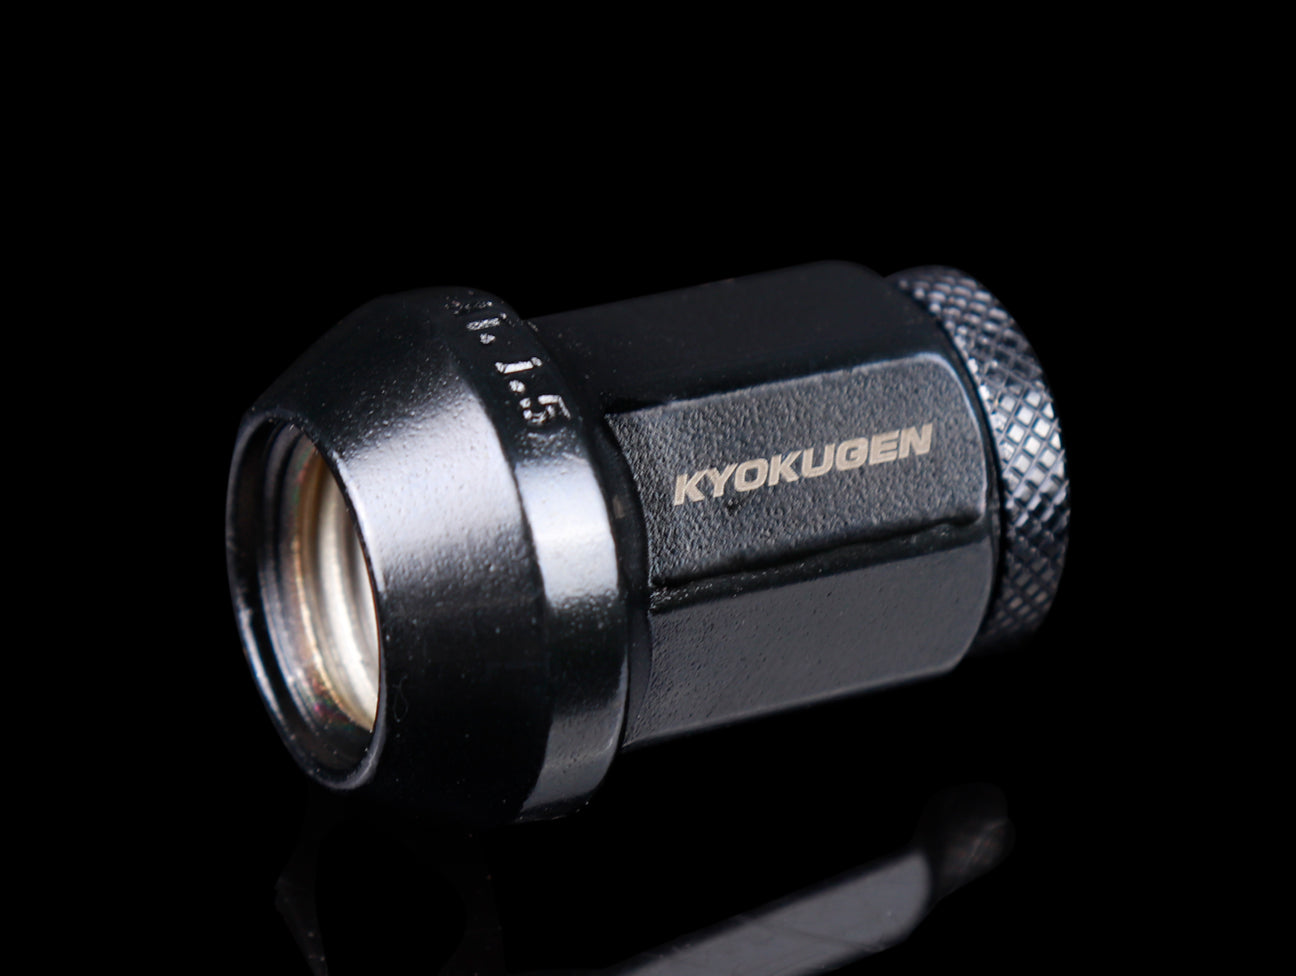 Project Kics Kyokugen Lug Nut Set with Black Aluminum Cap